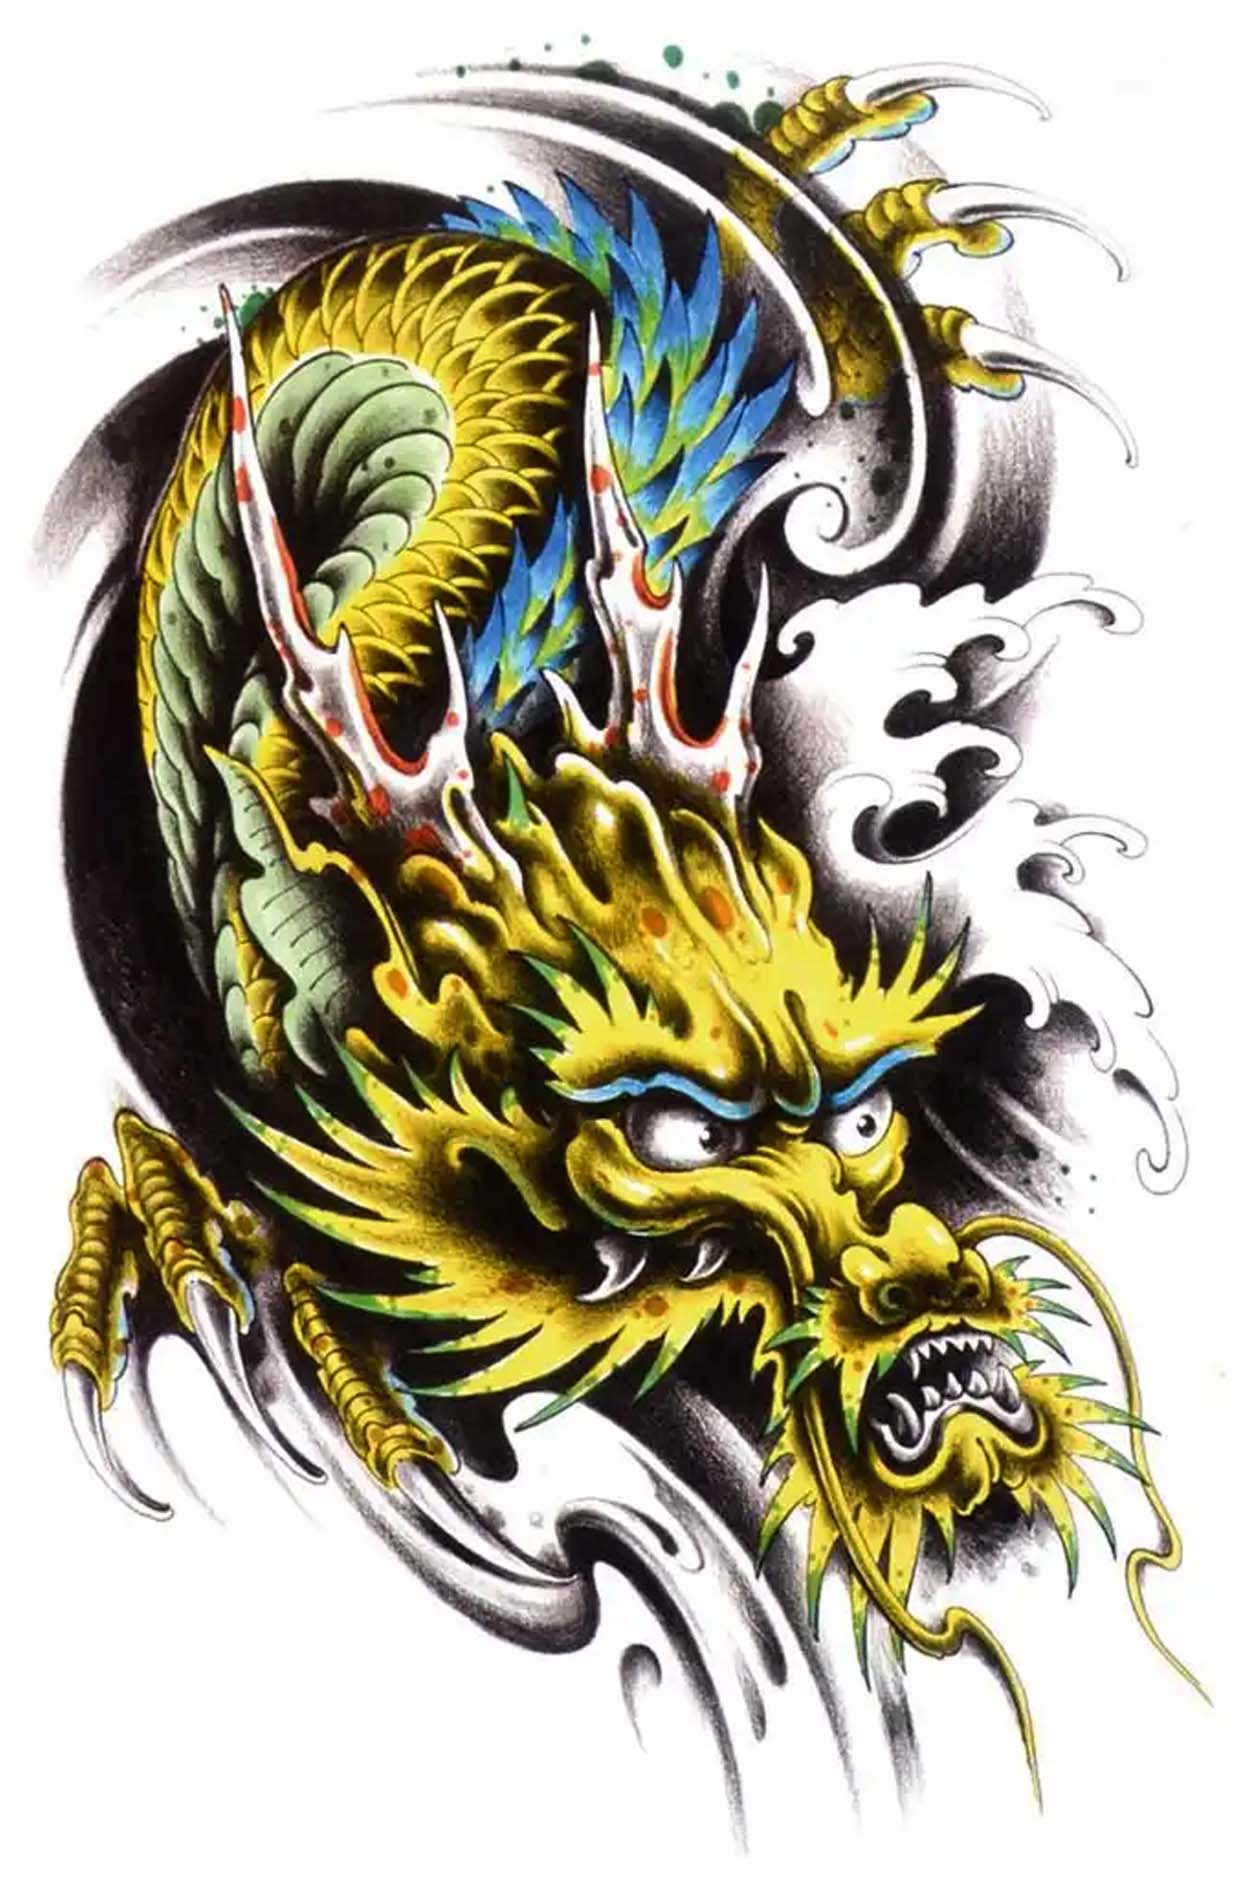 dragon head tattoo outline